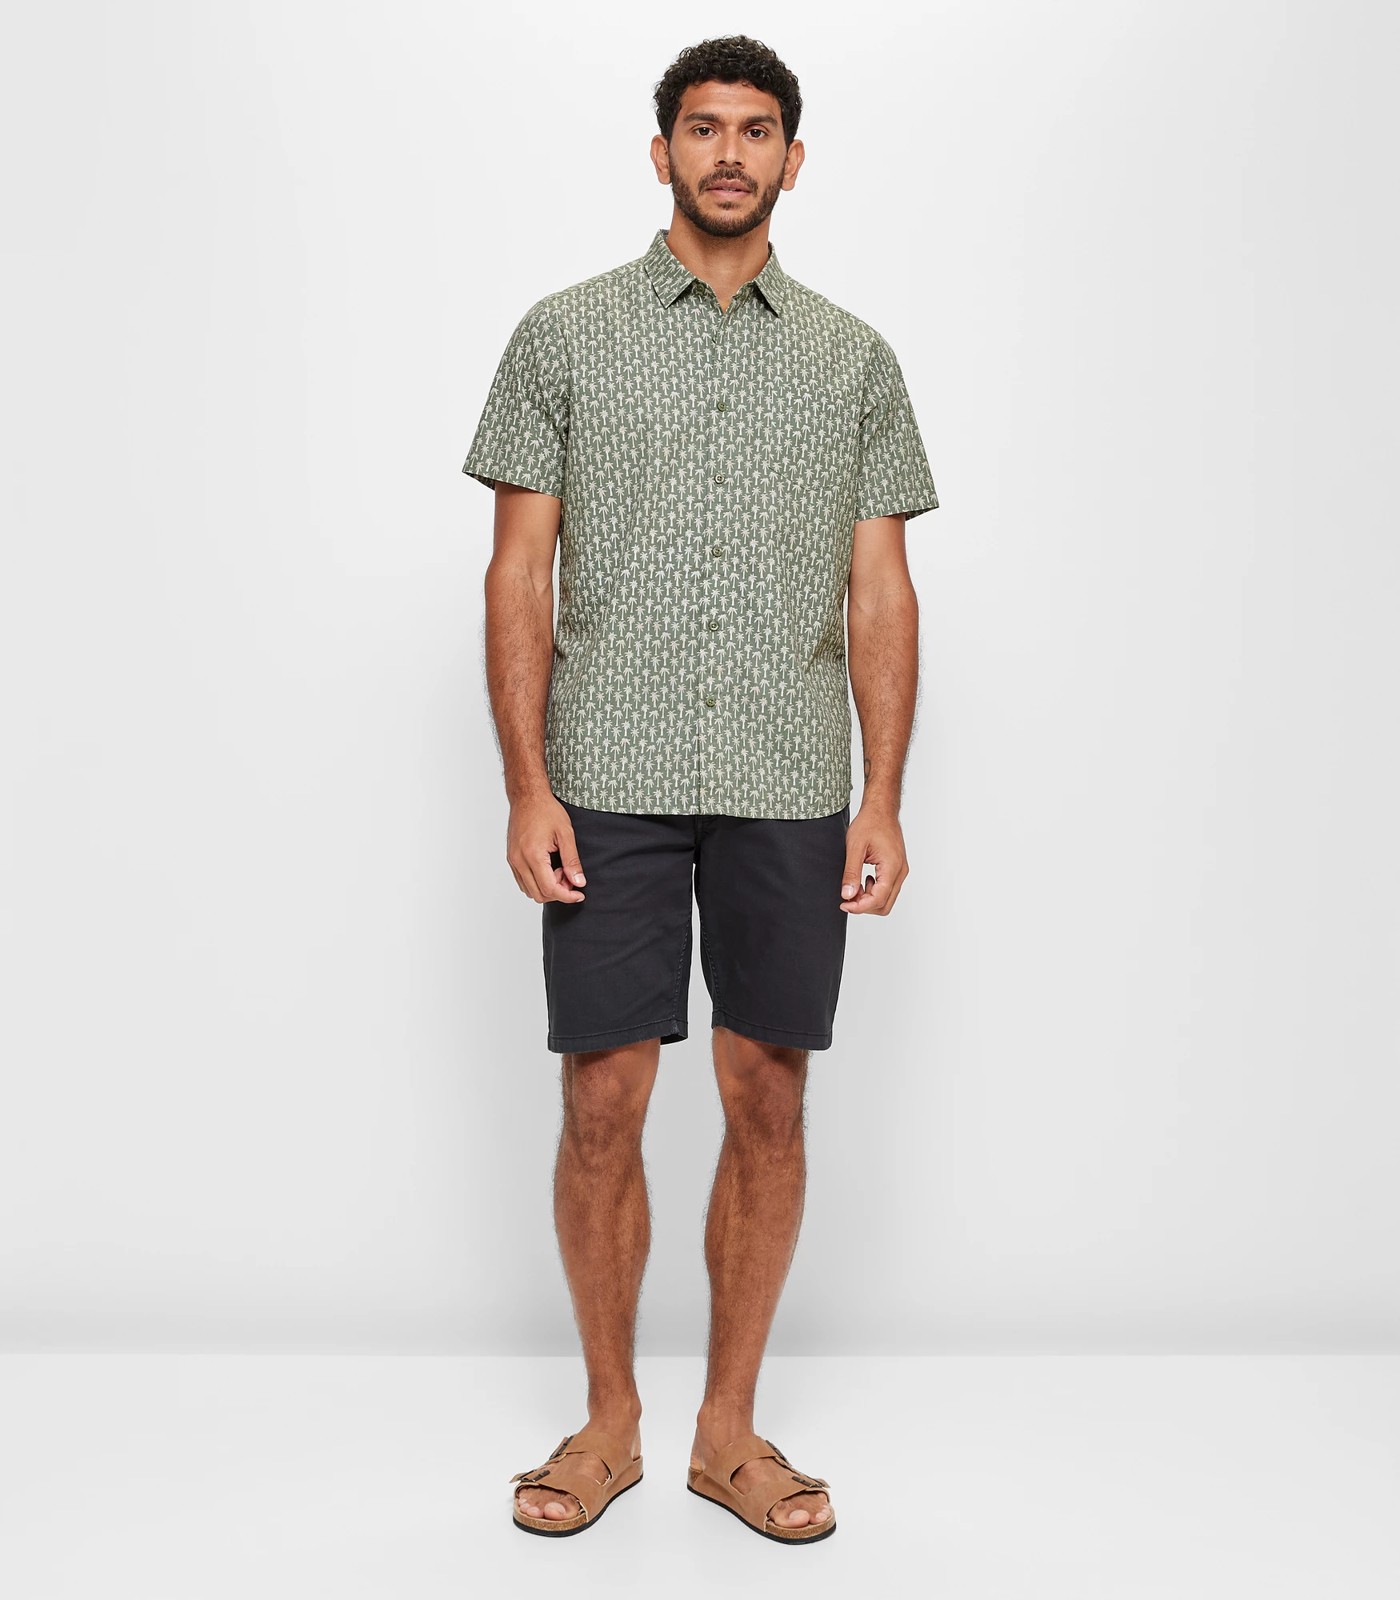 Palm Print Shirt | Target Australia